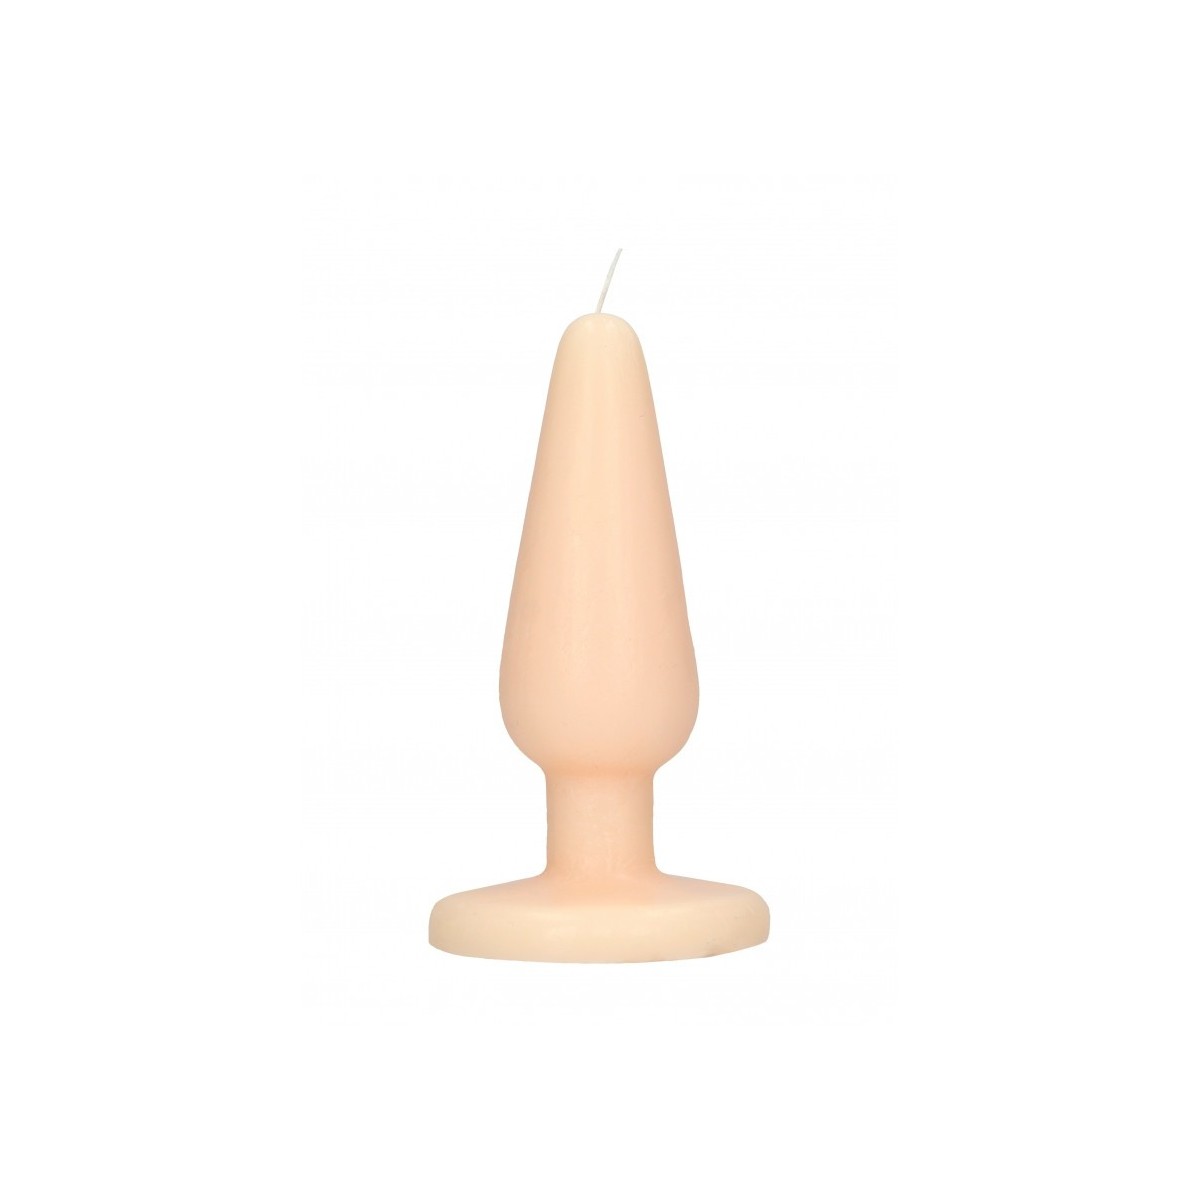 candela Scandalous Candles Butt Plug Flesh